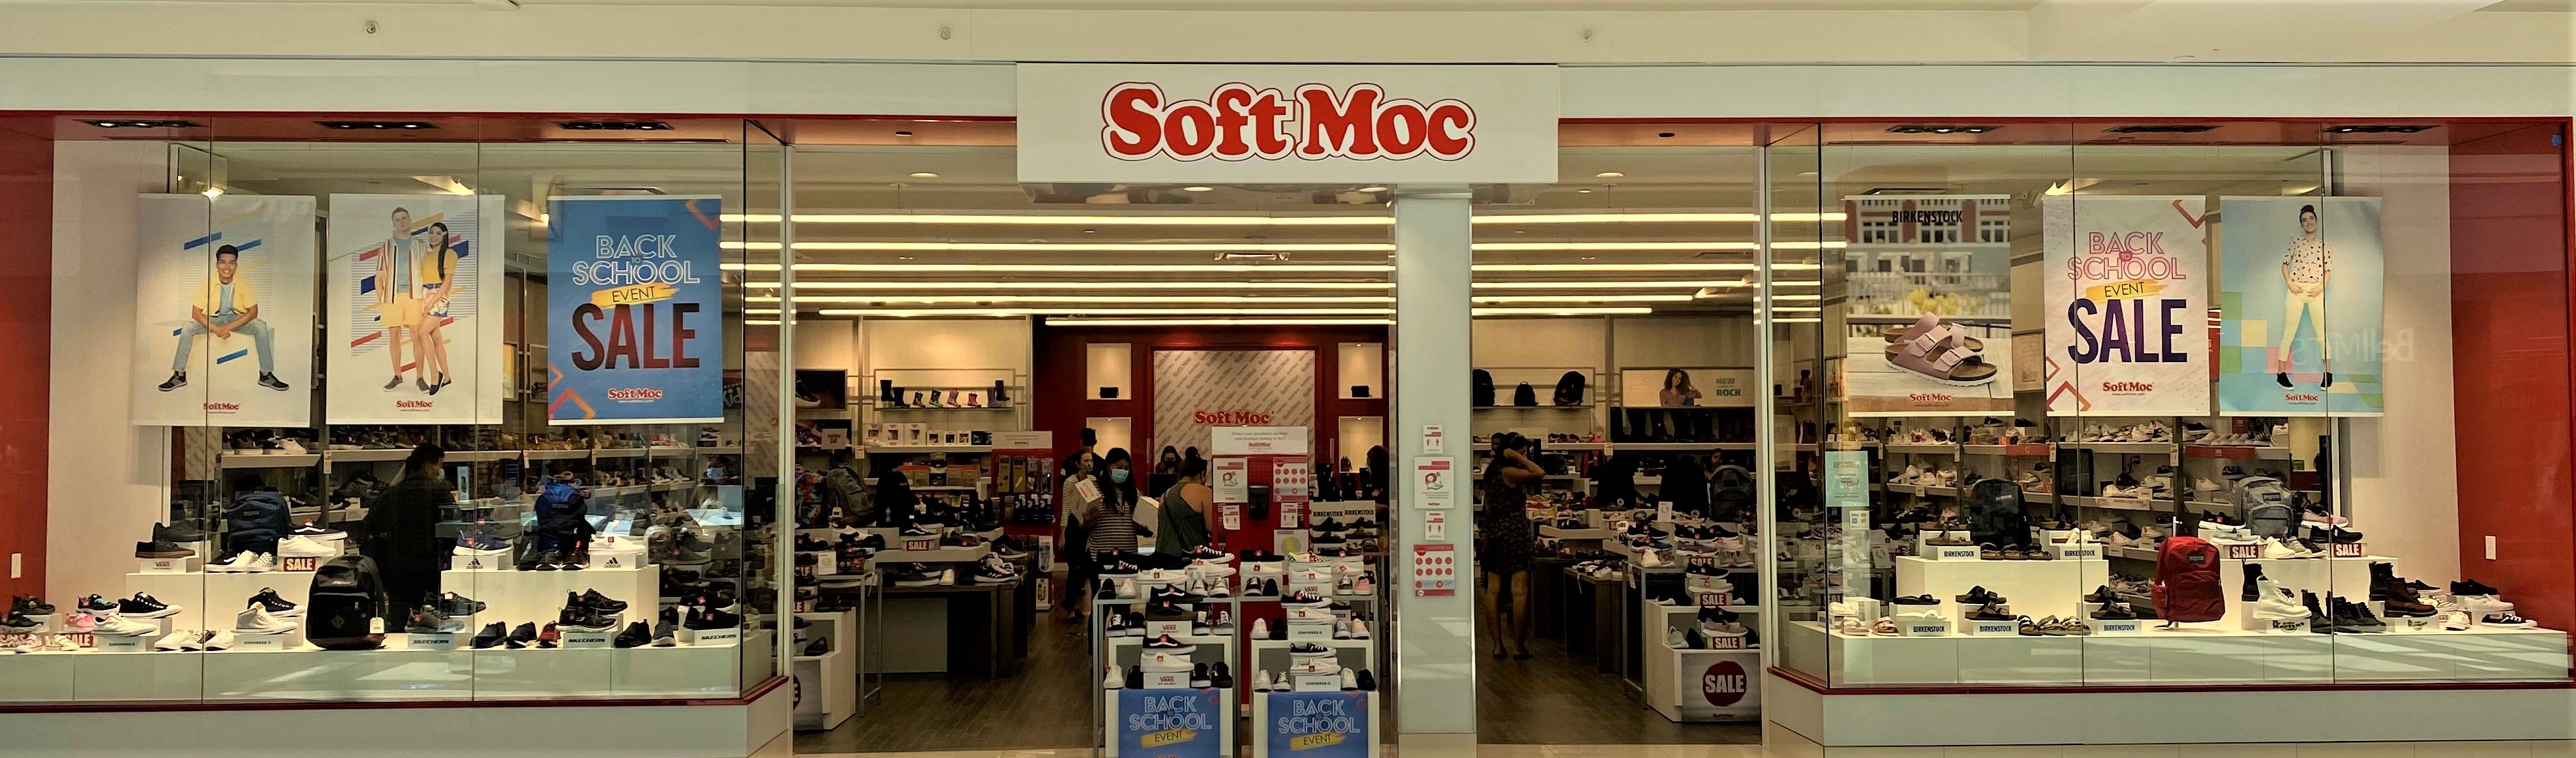 SoftMoc Polo Park Mall